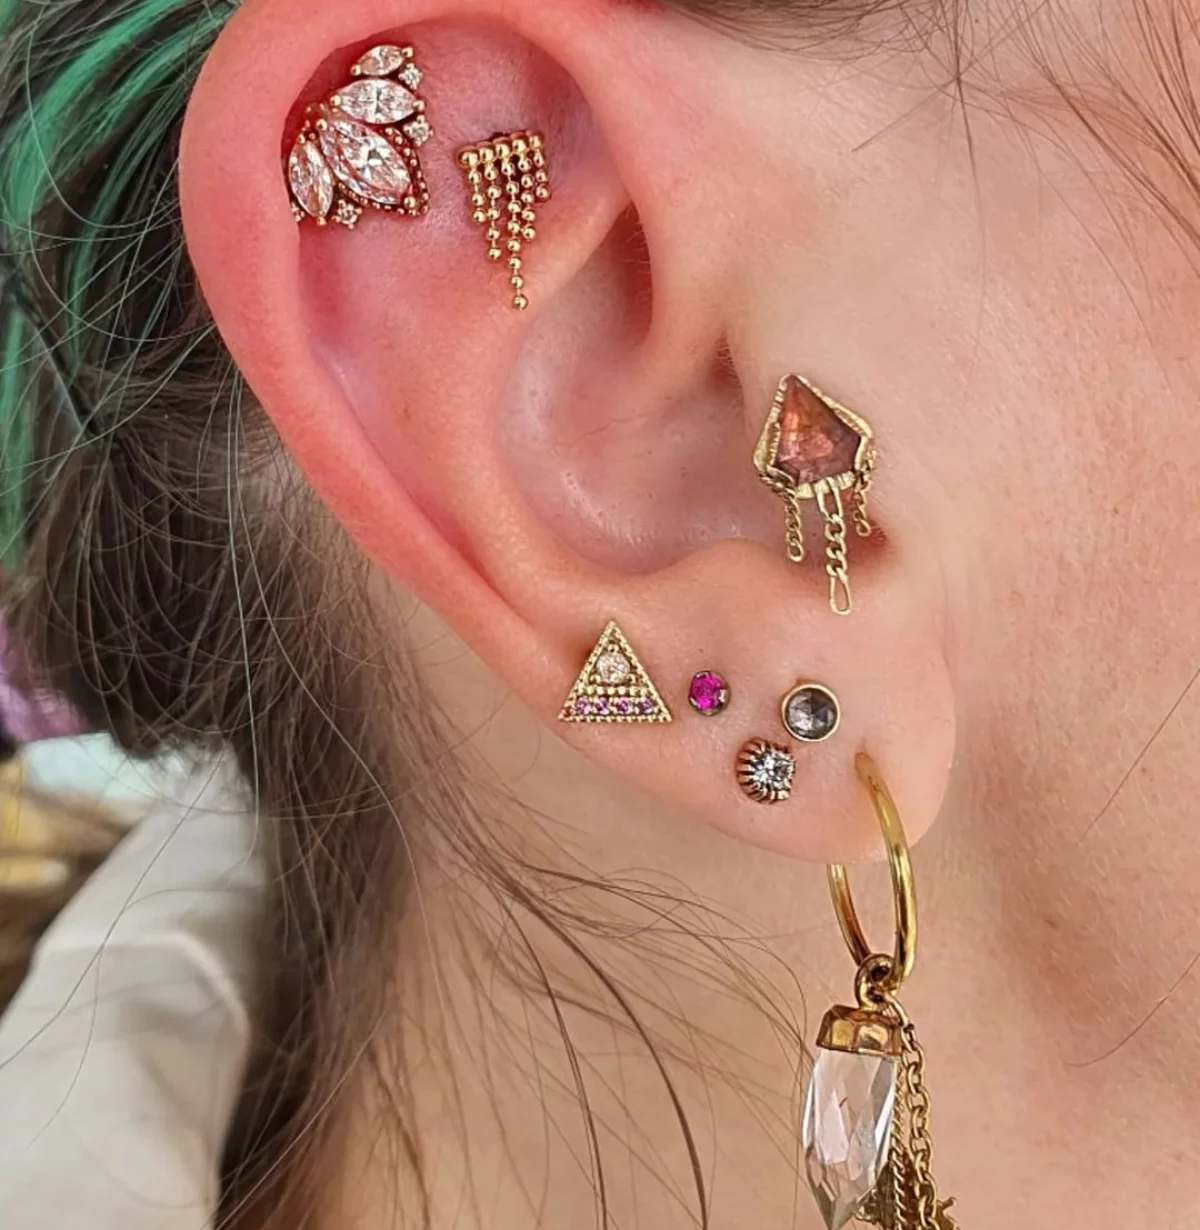 gemstone piercings on ear